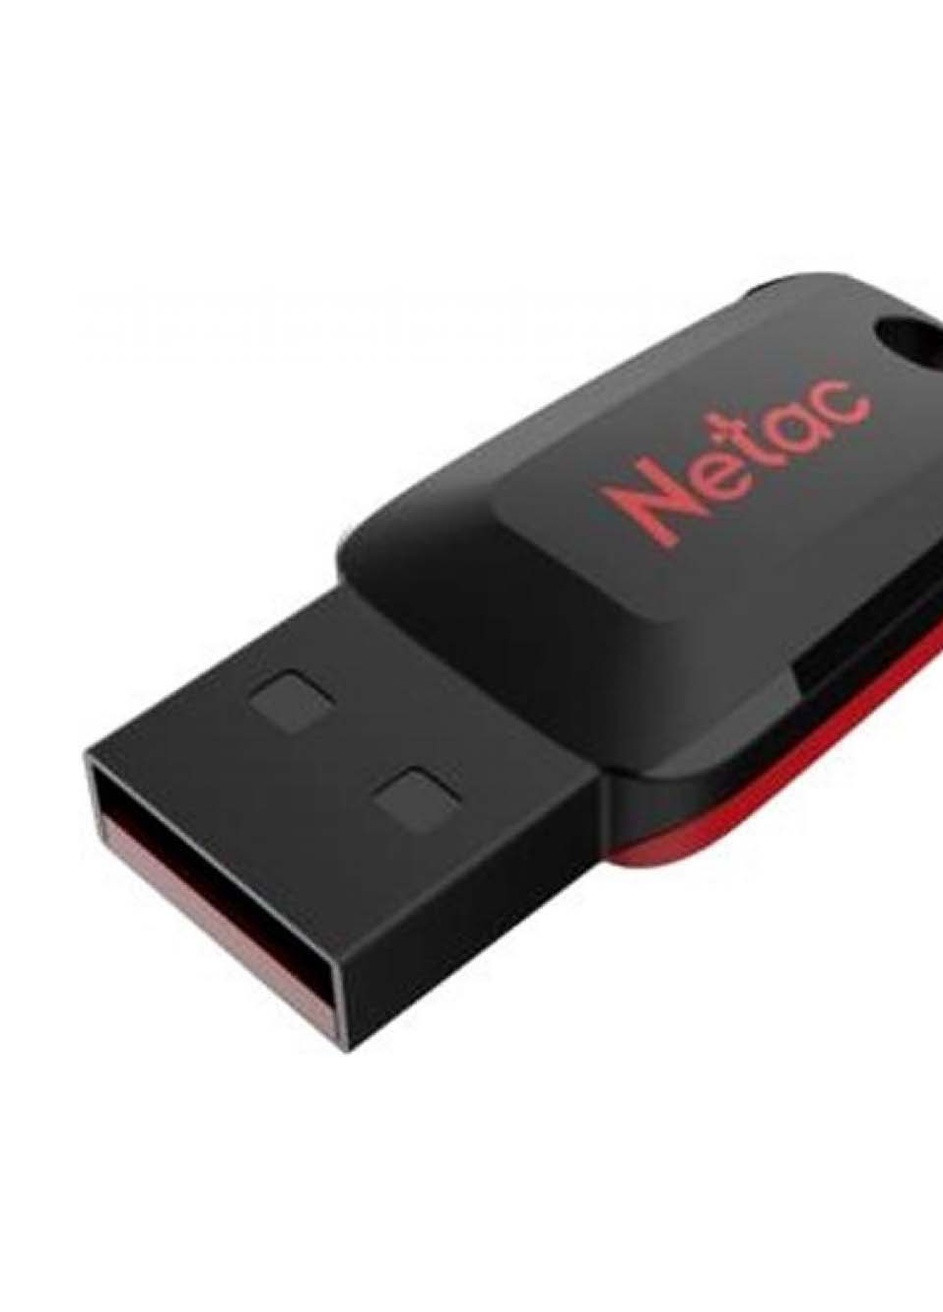 USB флеш накопитель Netac (NT03U197N-016G-20BK) Team 16gb u197 usb 2.0 (232750128)